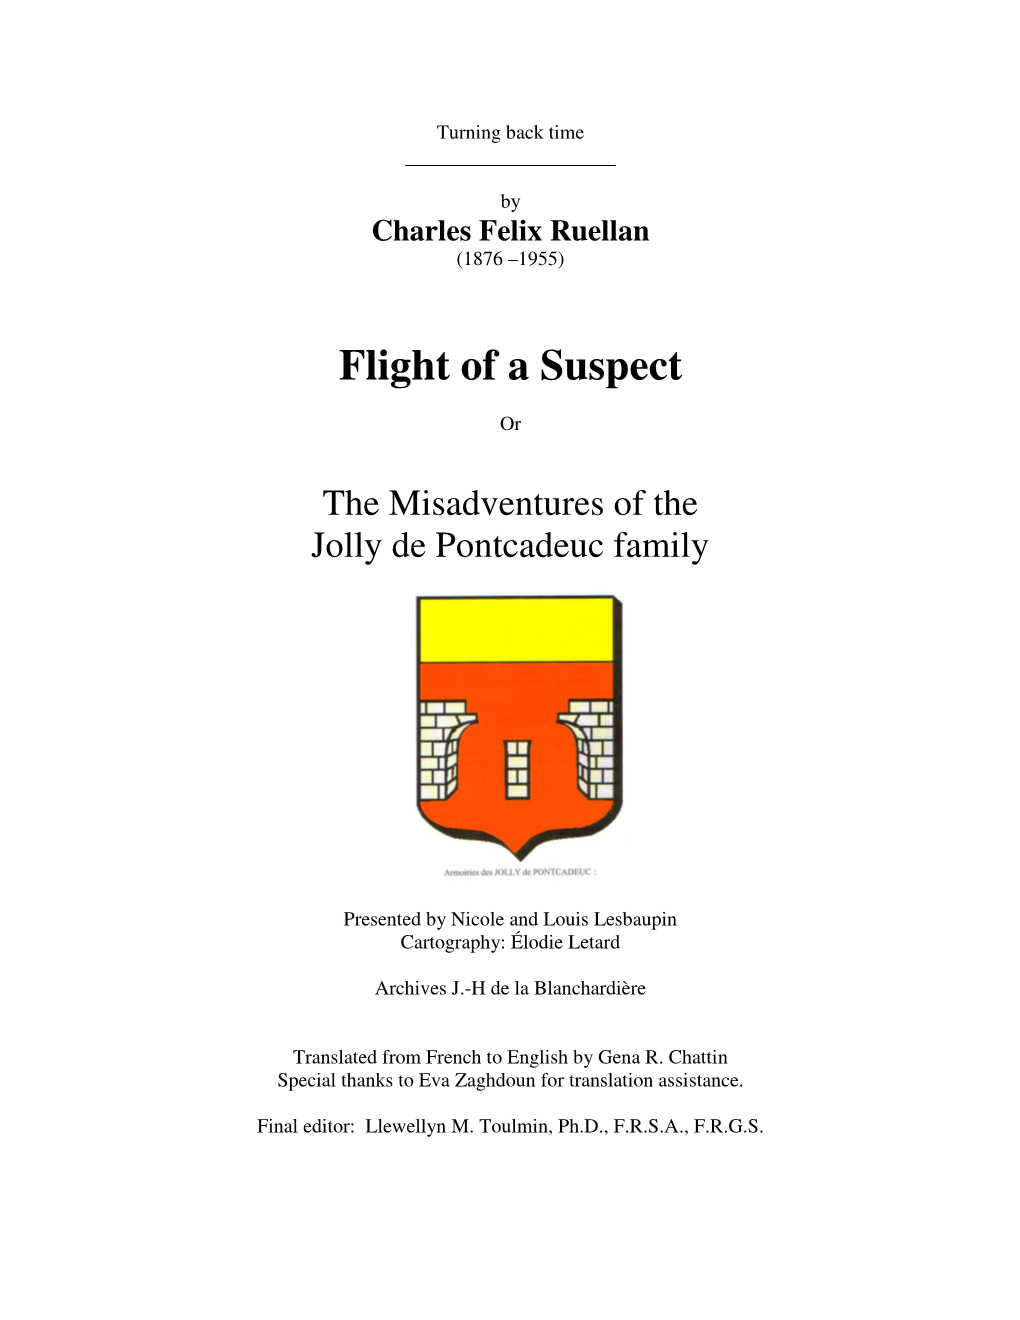 Flight of a Suspect